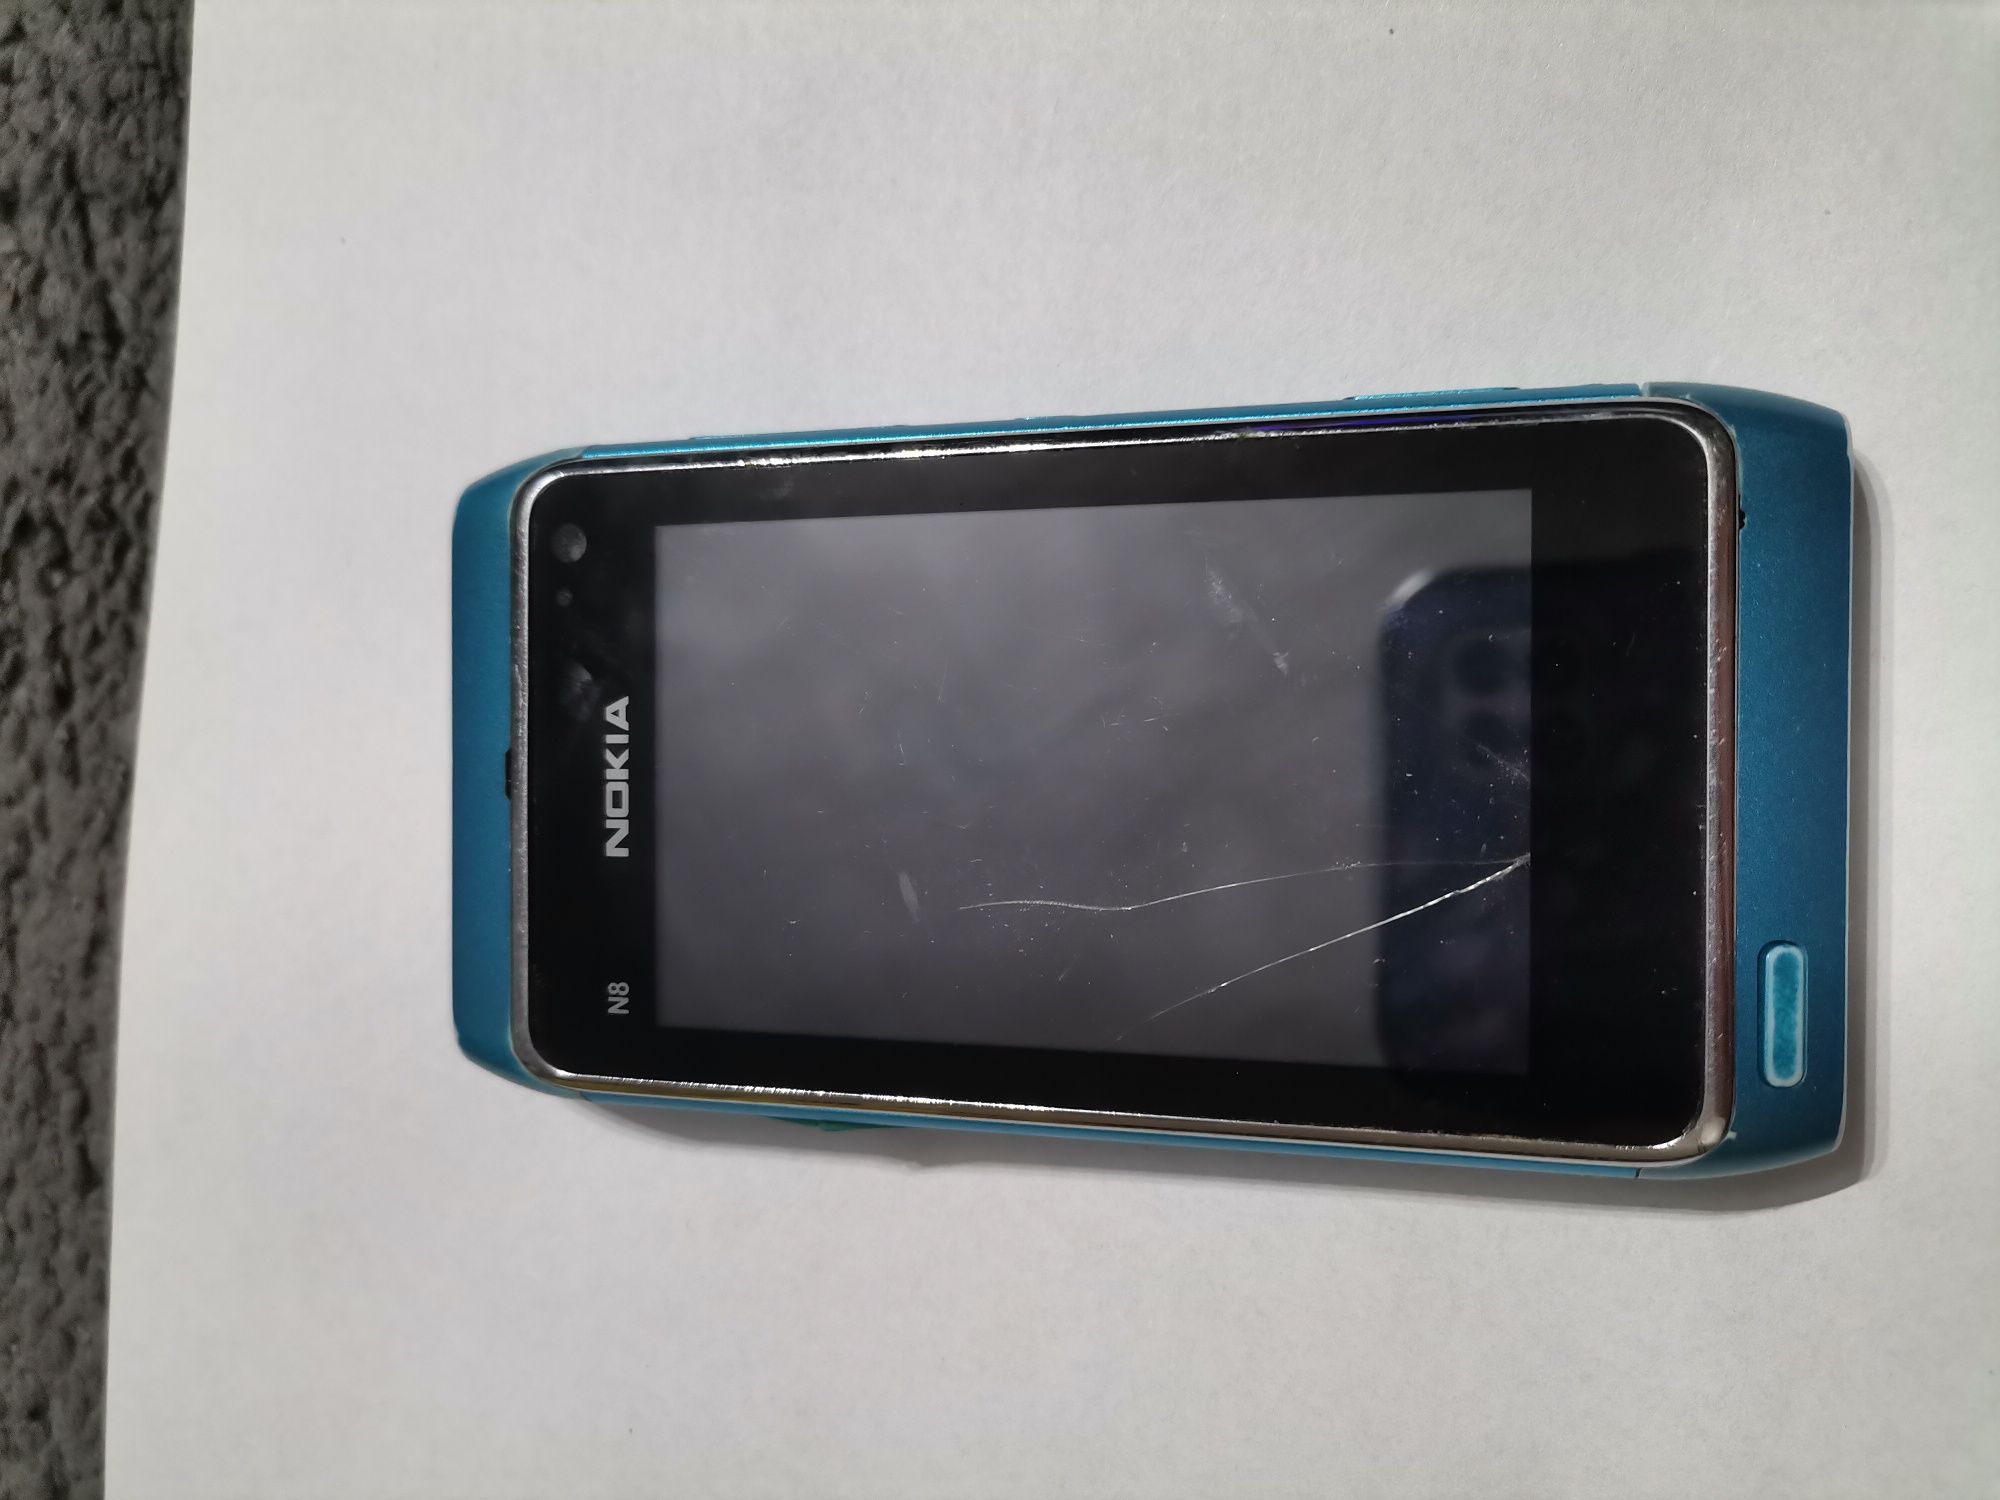 Telefon Nokia N8